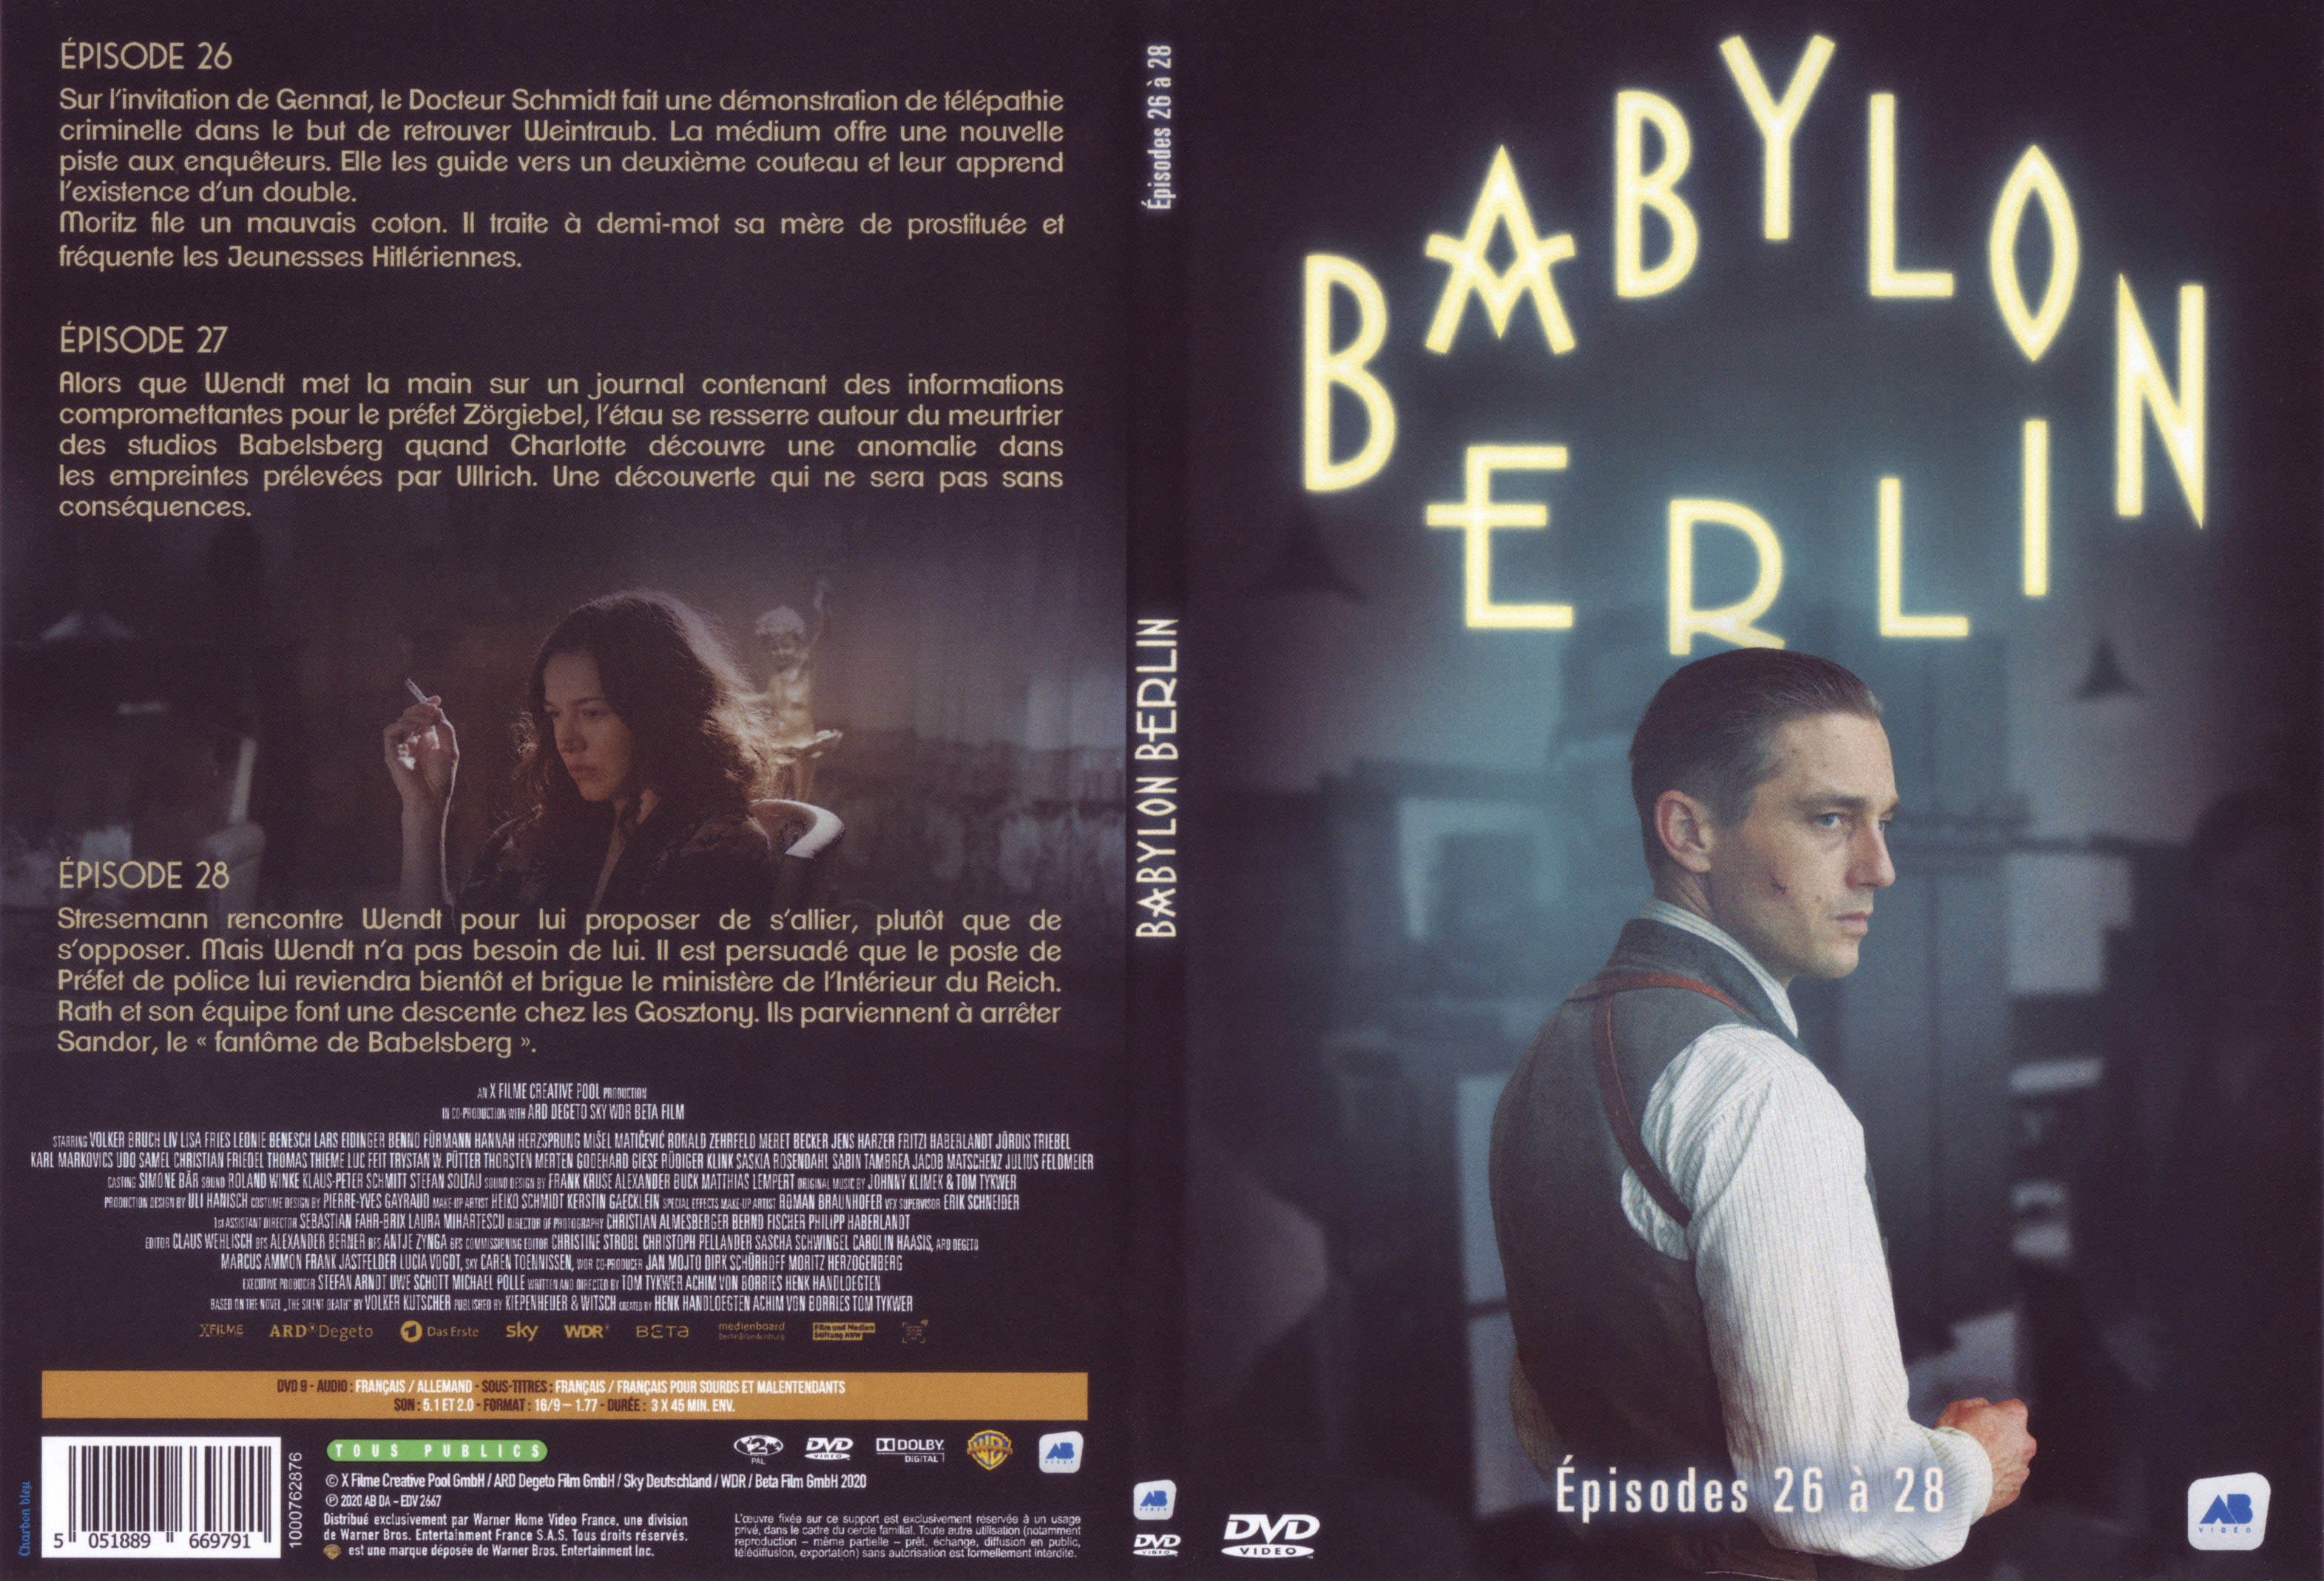 Jaquette DVD Babylon Berin Saison 3 Ep 26-28